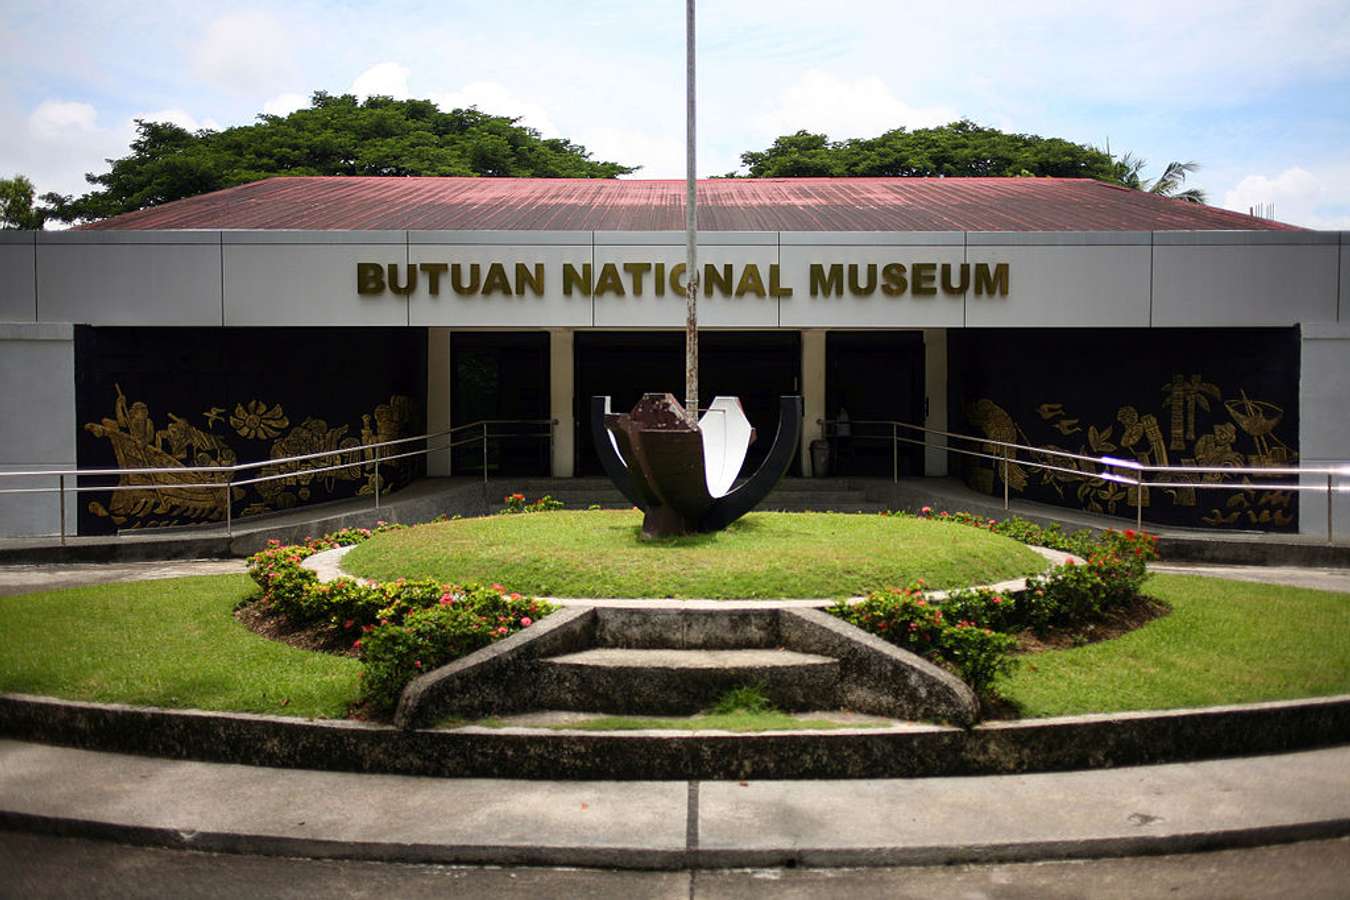 Butuan National Museum, Butuan City - Wikipedia